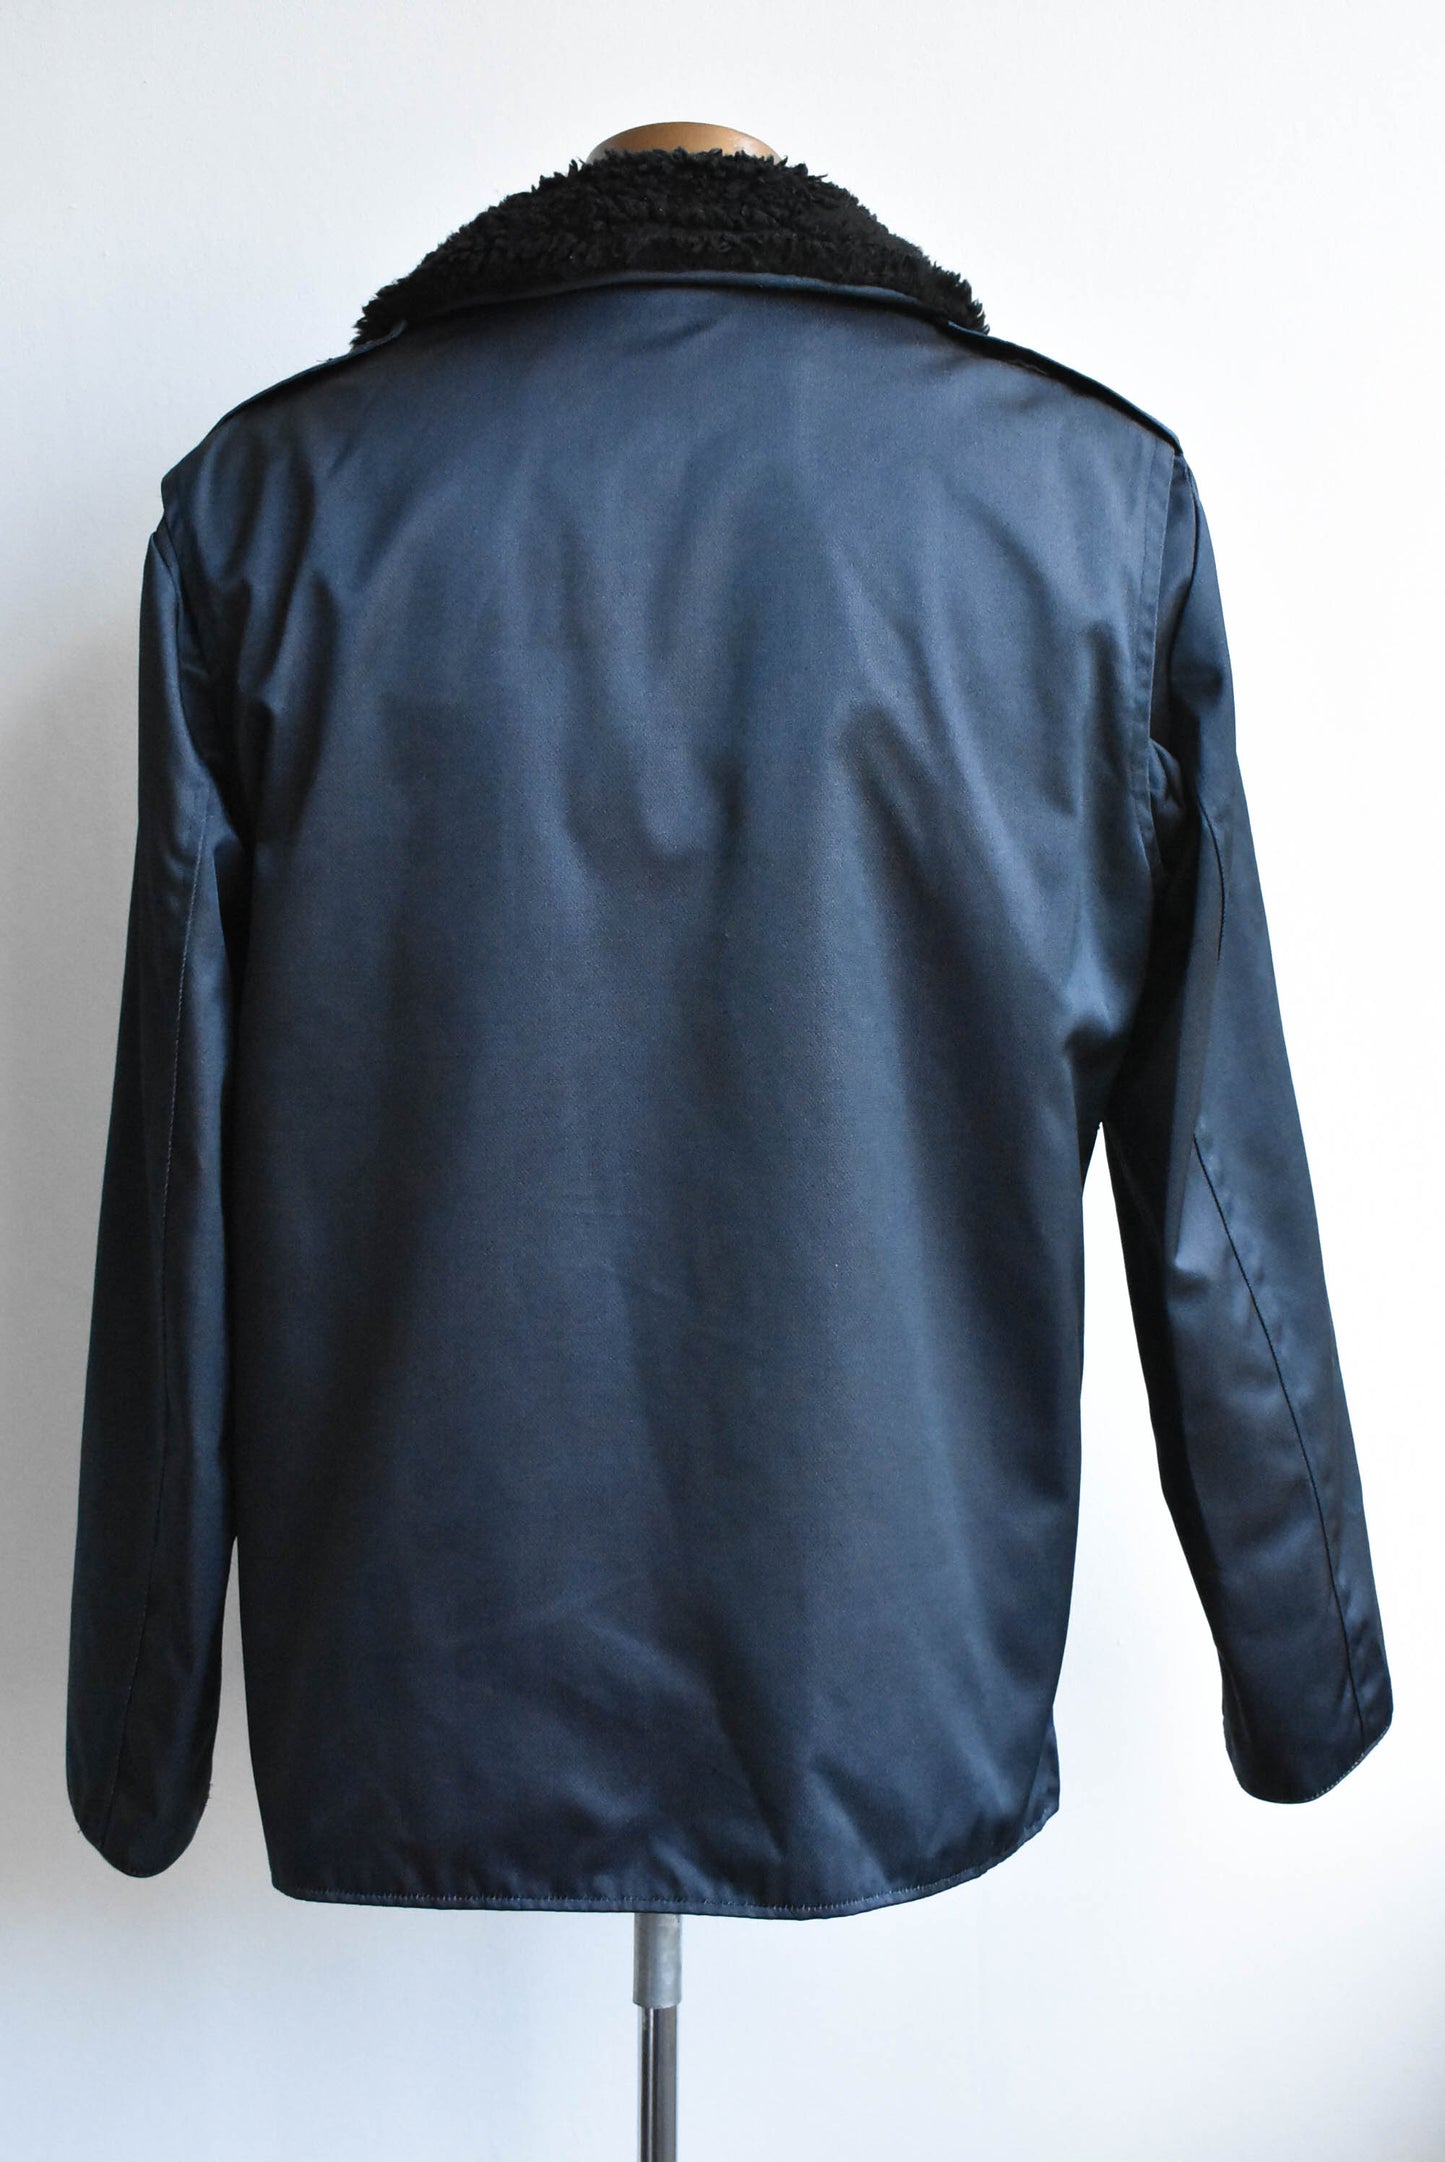 Eagle 2 Vintage Made in New Zealand waterproof jacket,